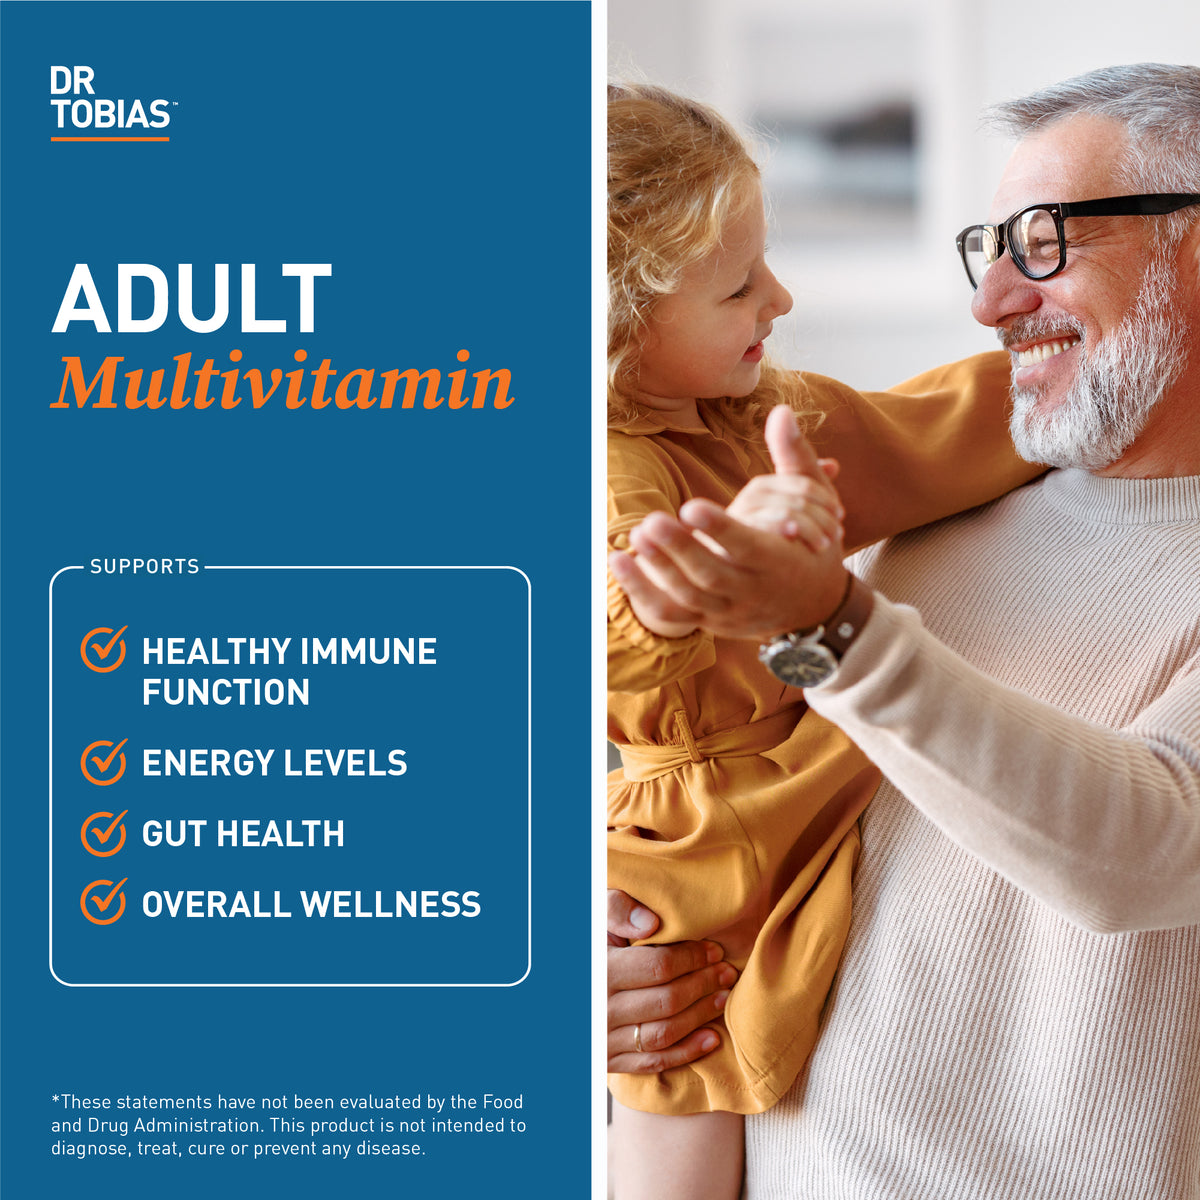 Dr Tobias Adult Multivitamin, Dr Tobias Multivitamin, multivitamin made with whole foods, Dr Tobias Multivitamin Ingredients